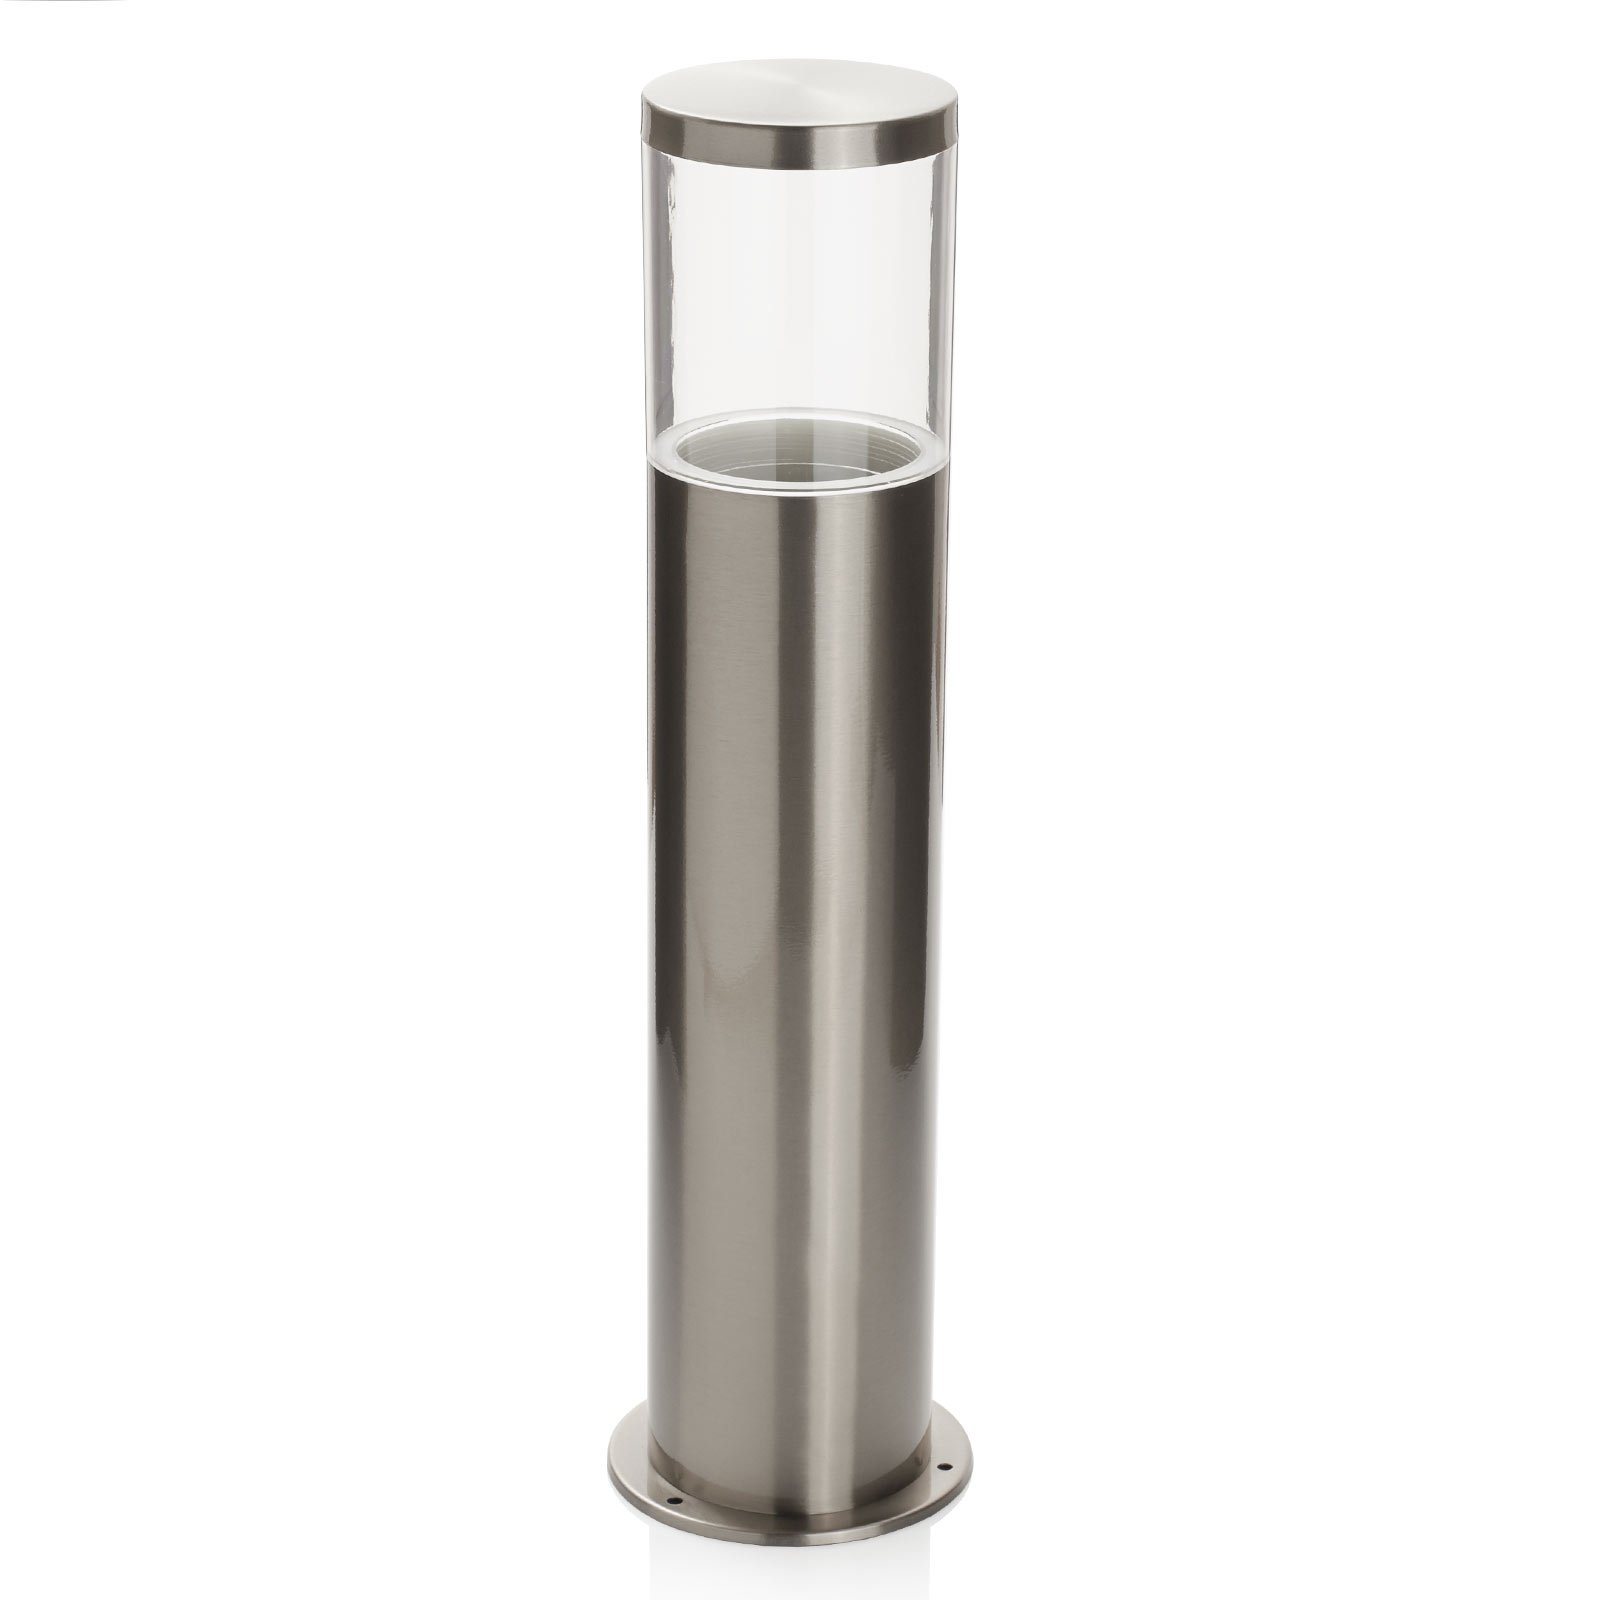 Hanneli pillar lamp made of stainless steel, round